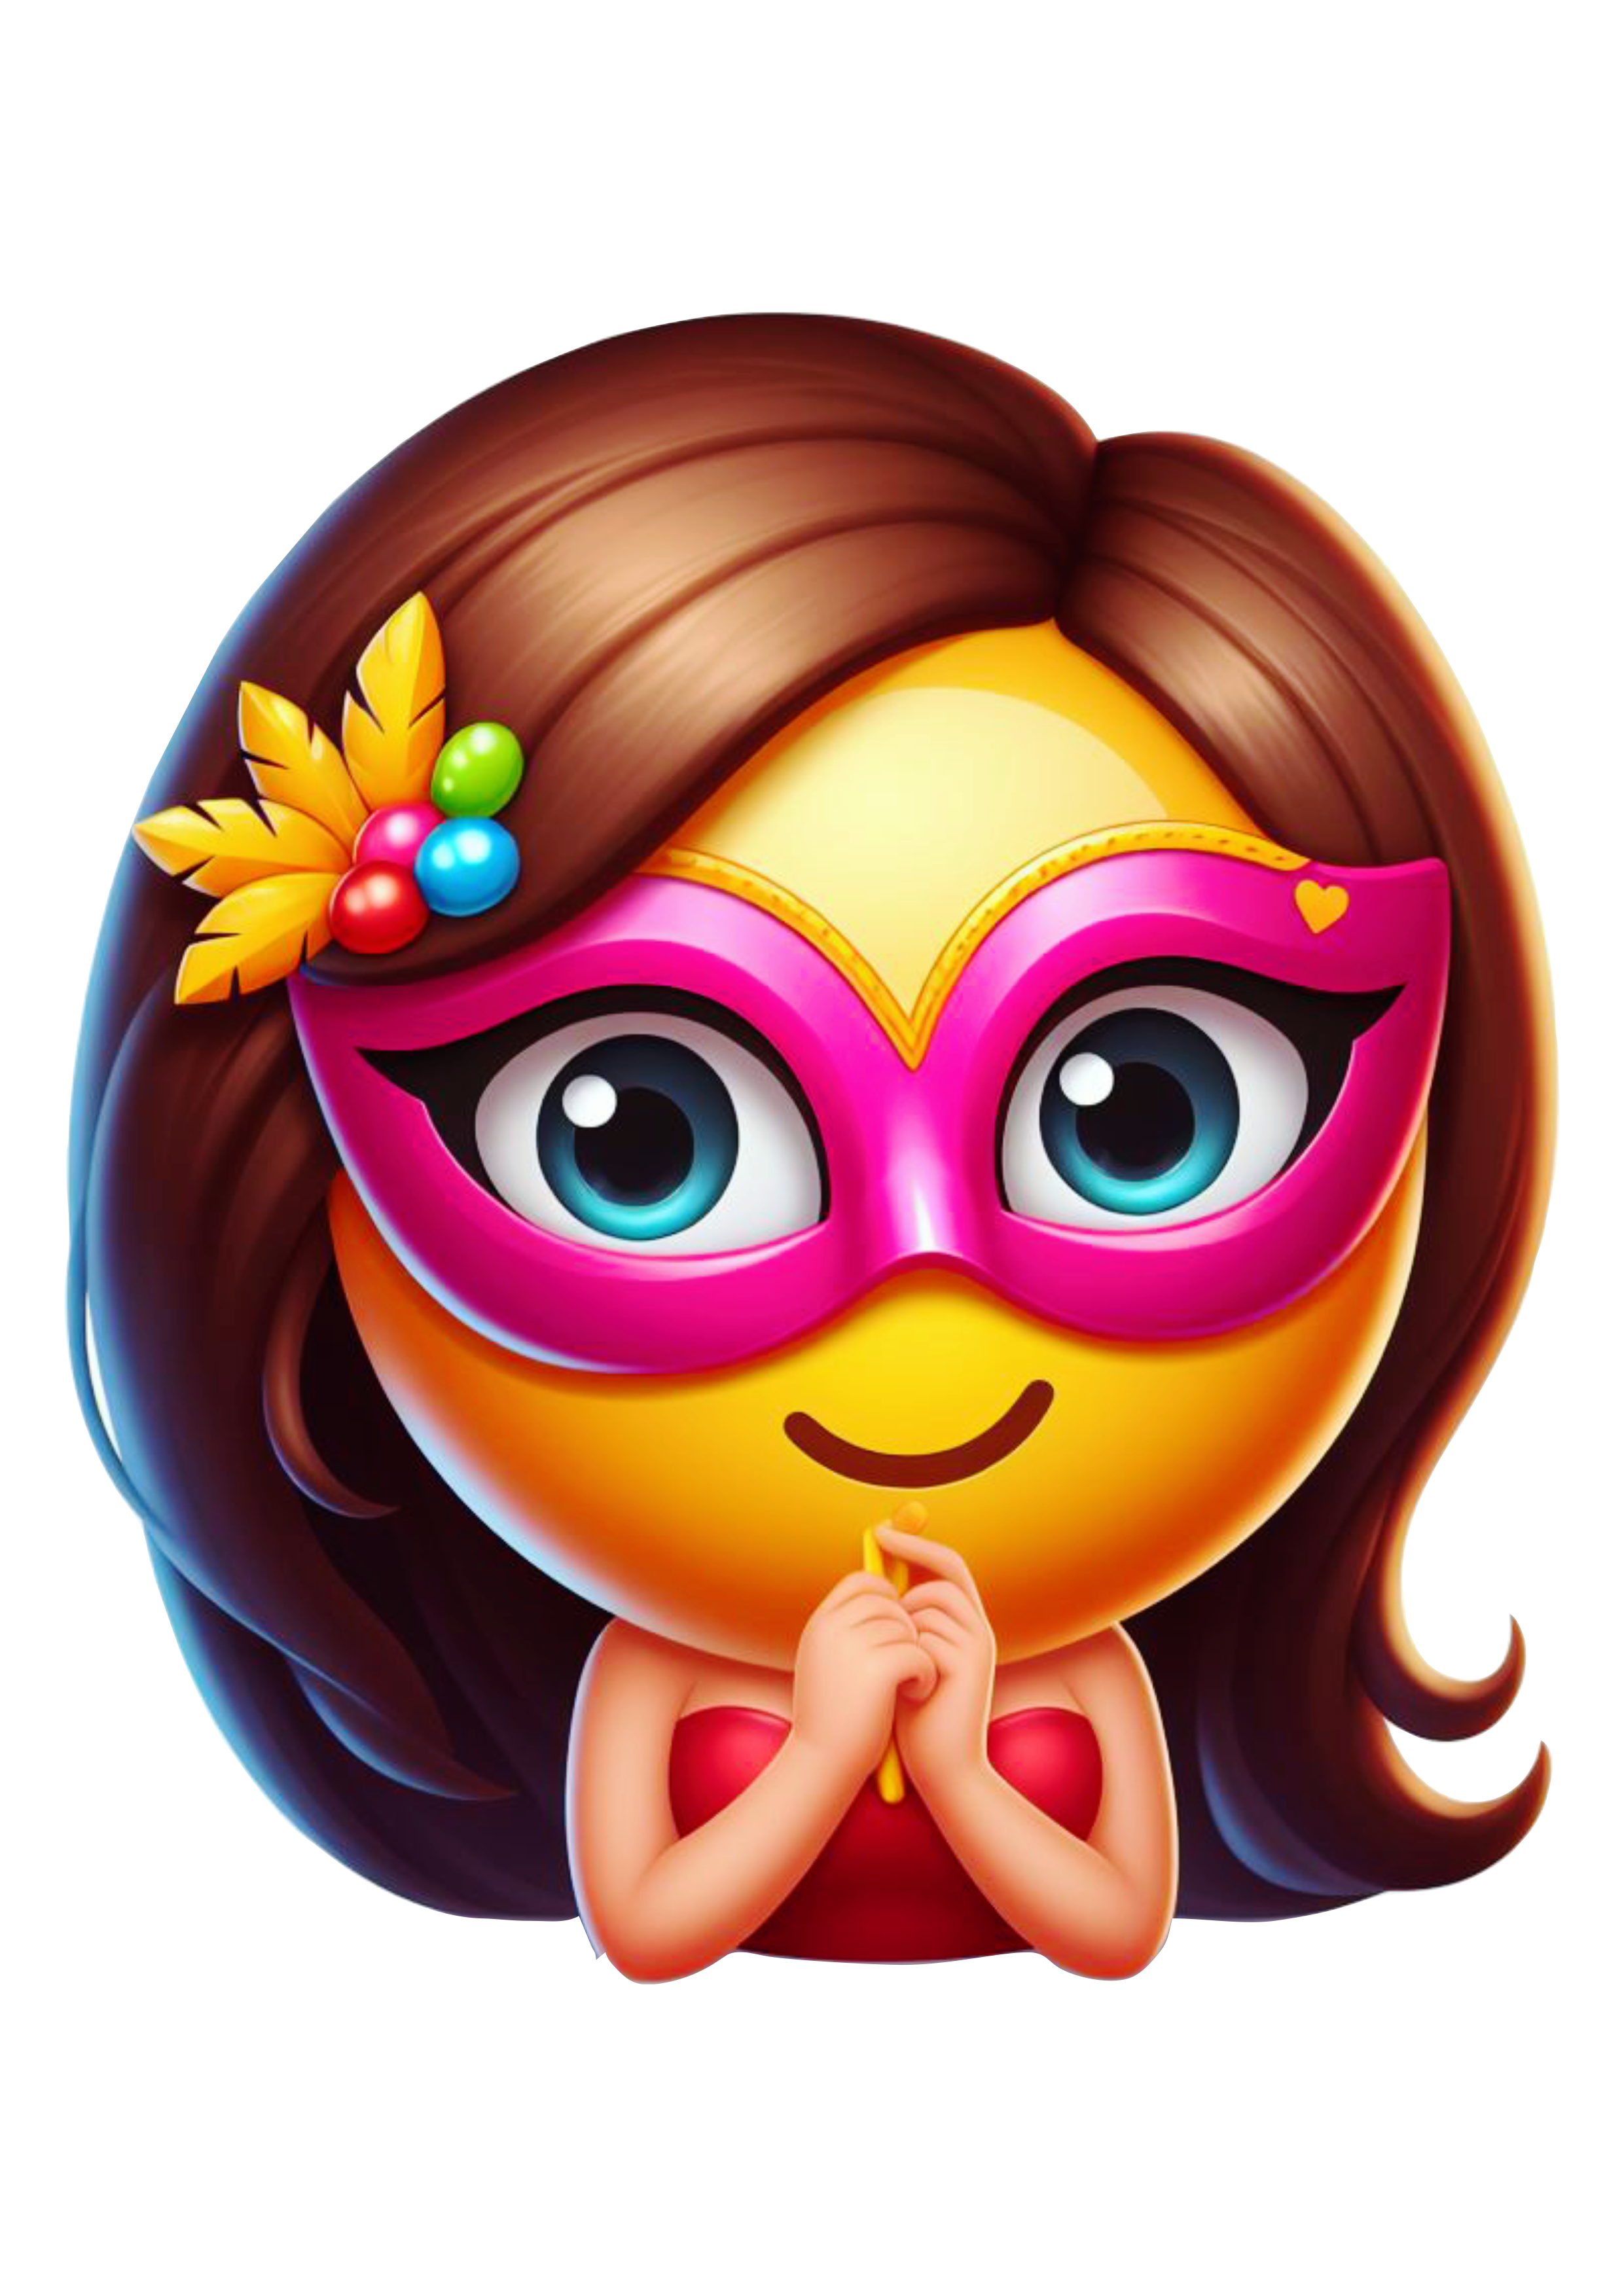 Emoji engraçado de carnaval para redes sociais mulher de máscara cabelo bonito artes gráficas png